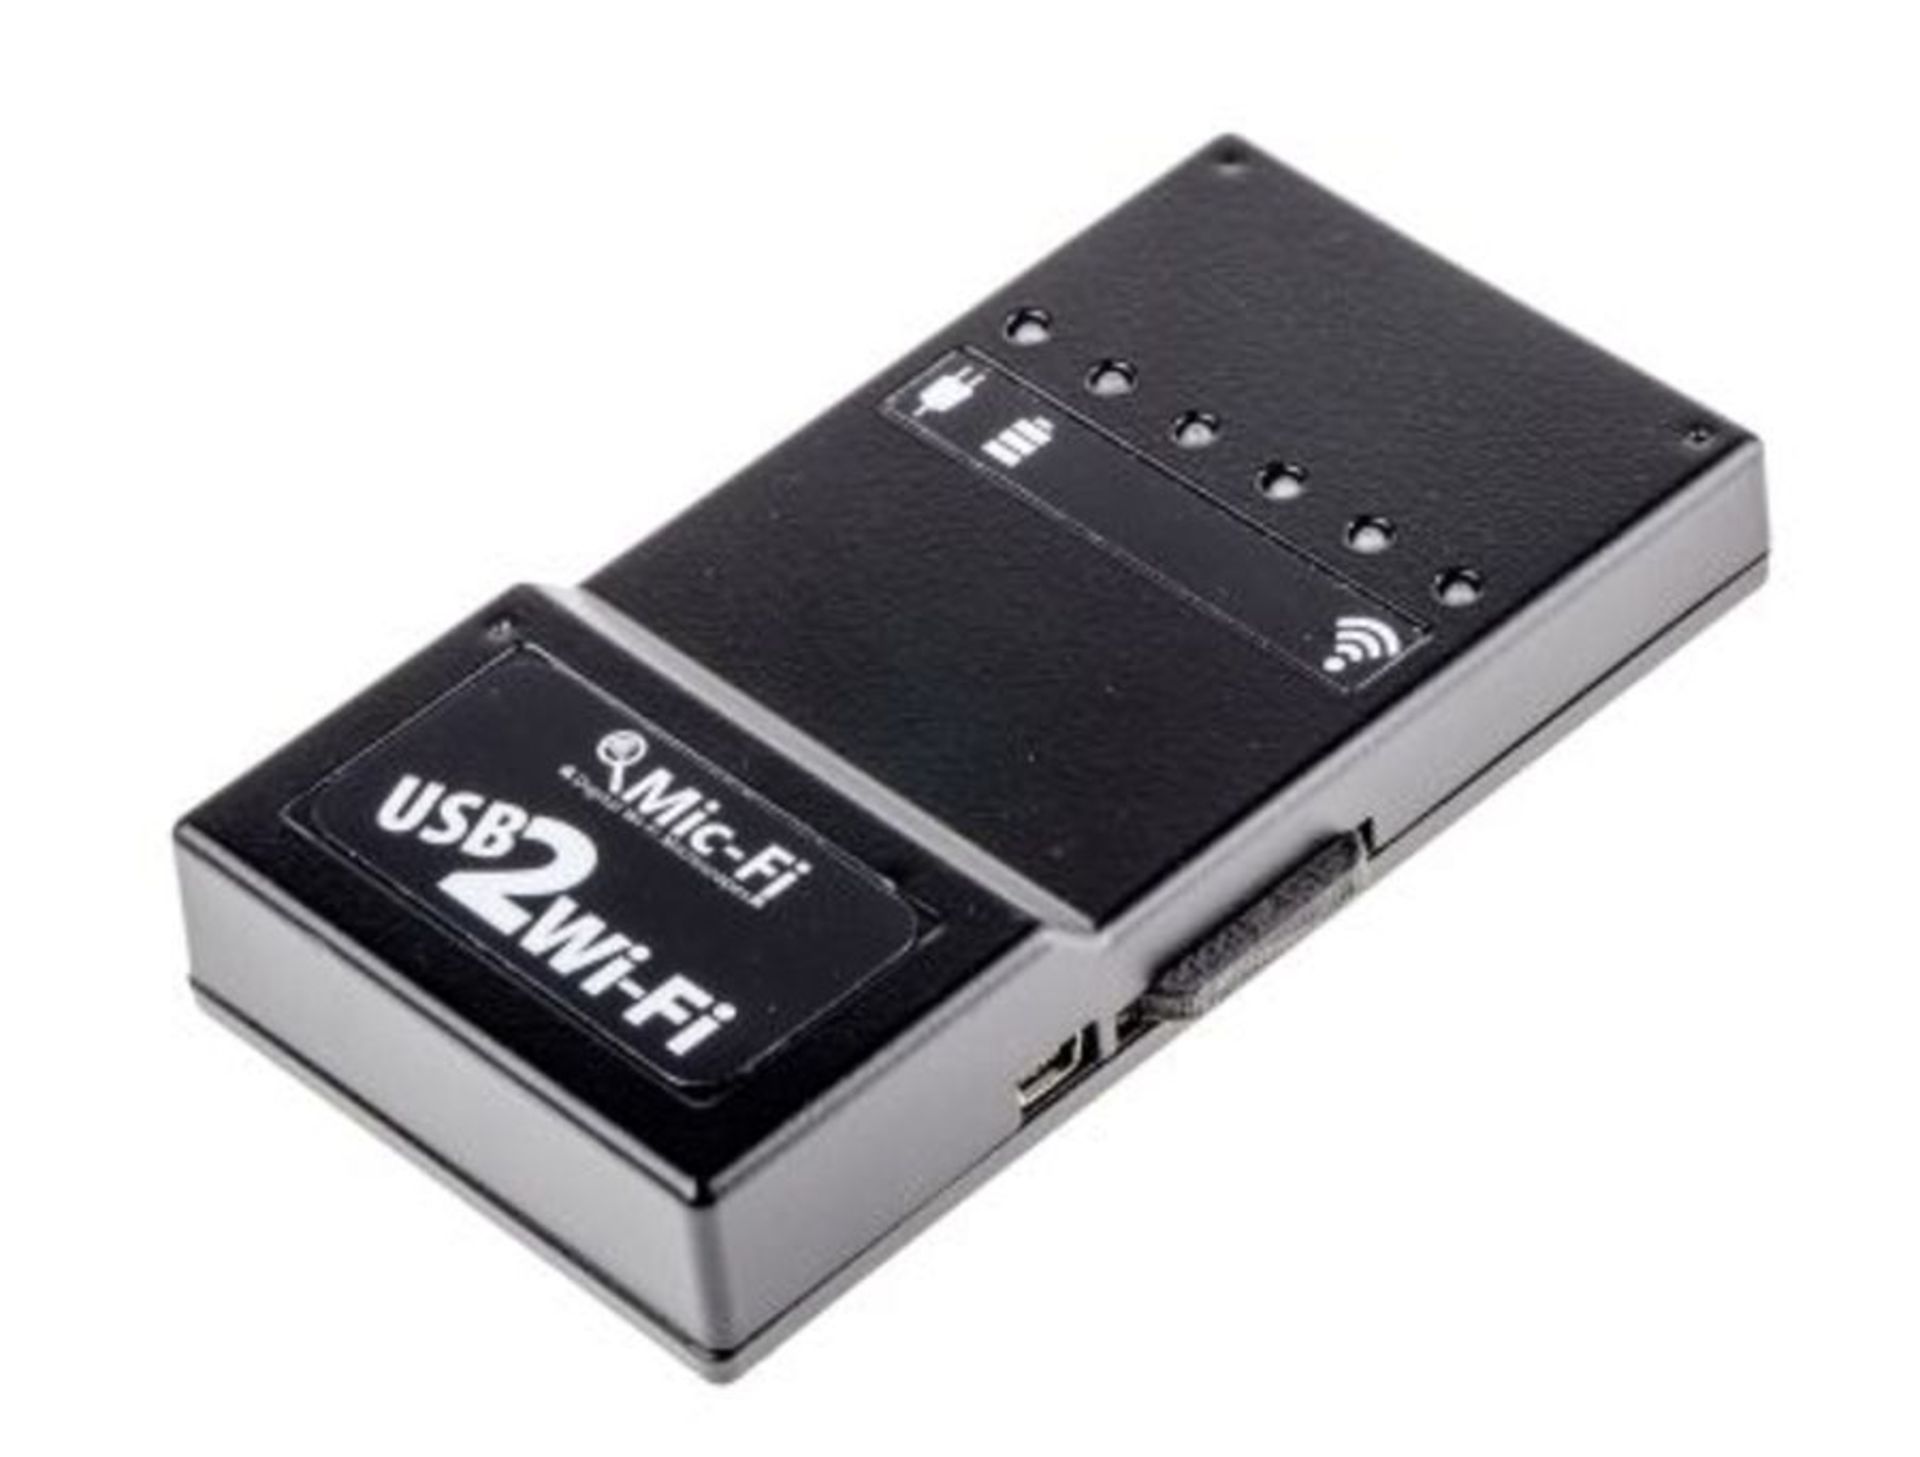 Wi Fi Digi box streamer USB-Wi-Fi - Microscope / Endoscope / Eyepiece Camera - Image 3 of 4